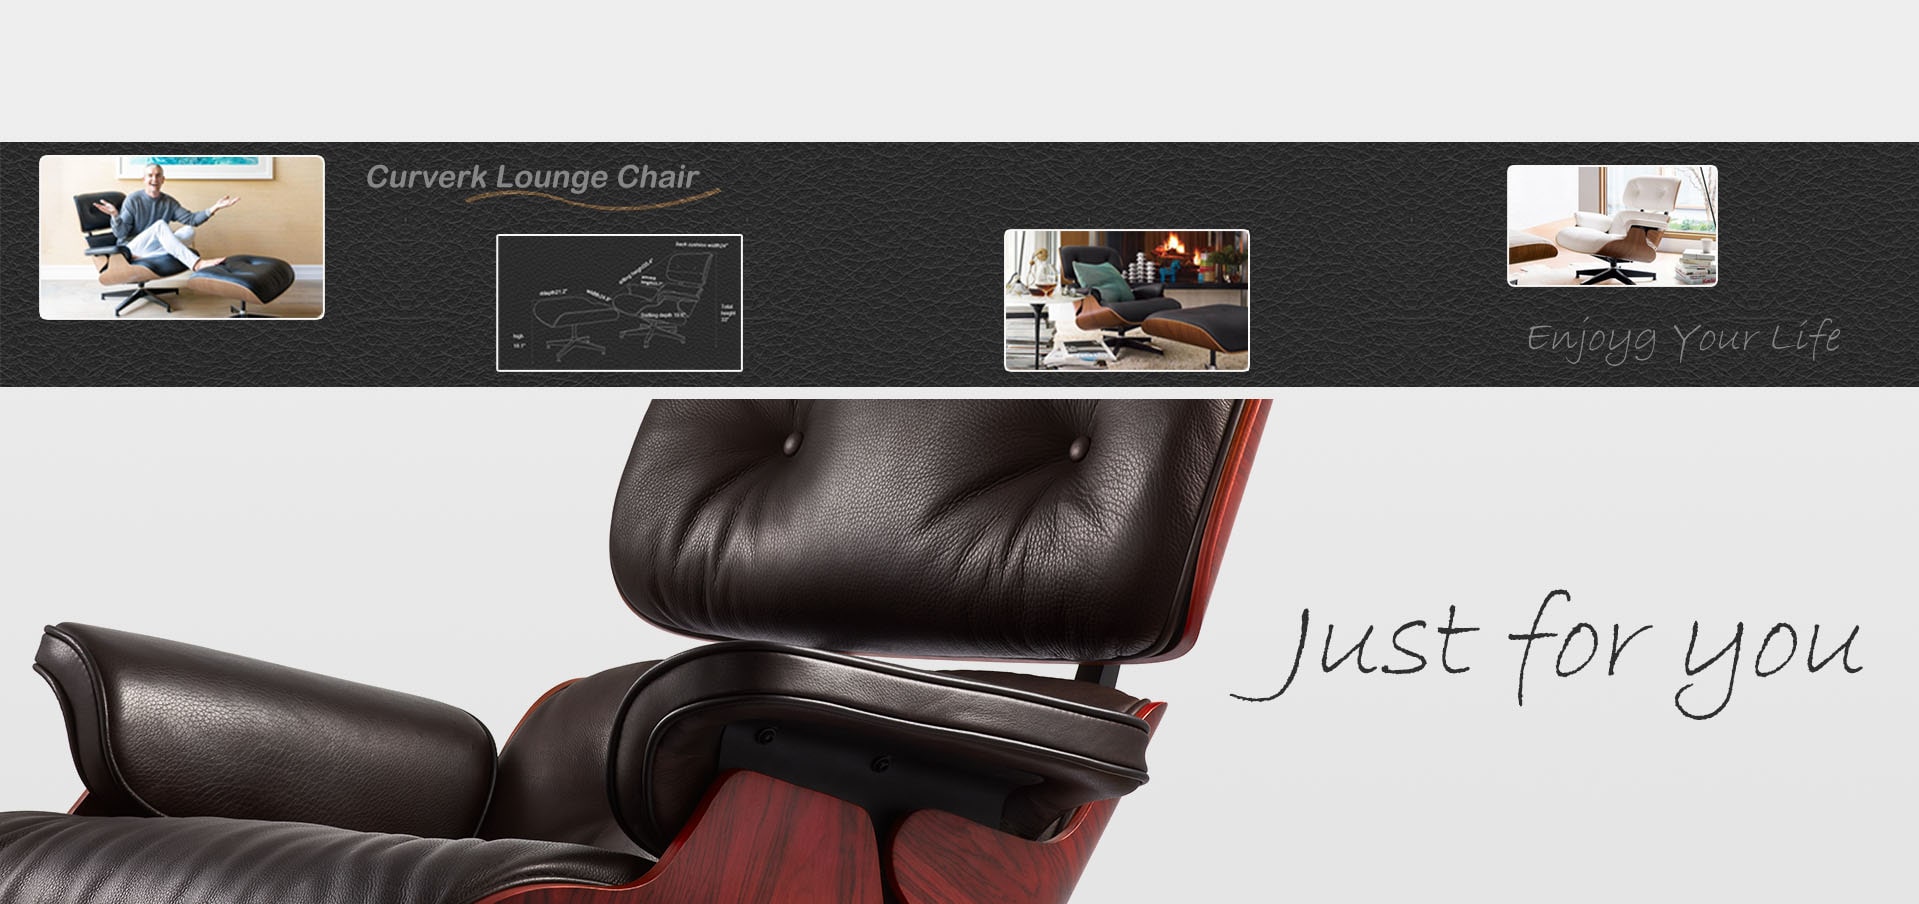 Curverk Lounge Chair Banner